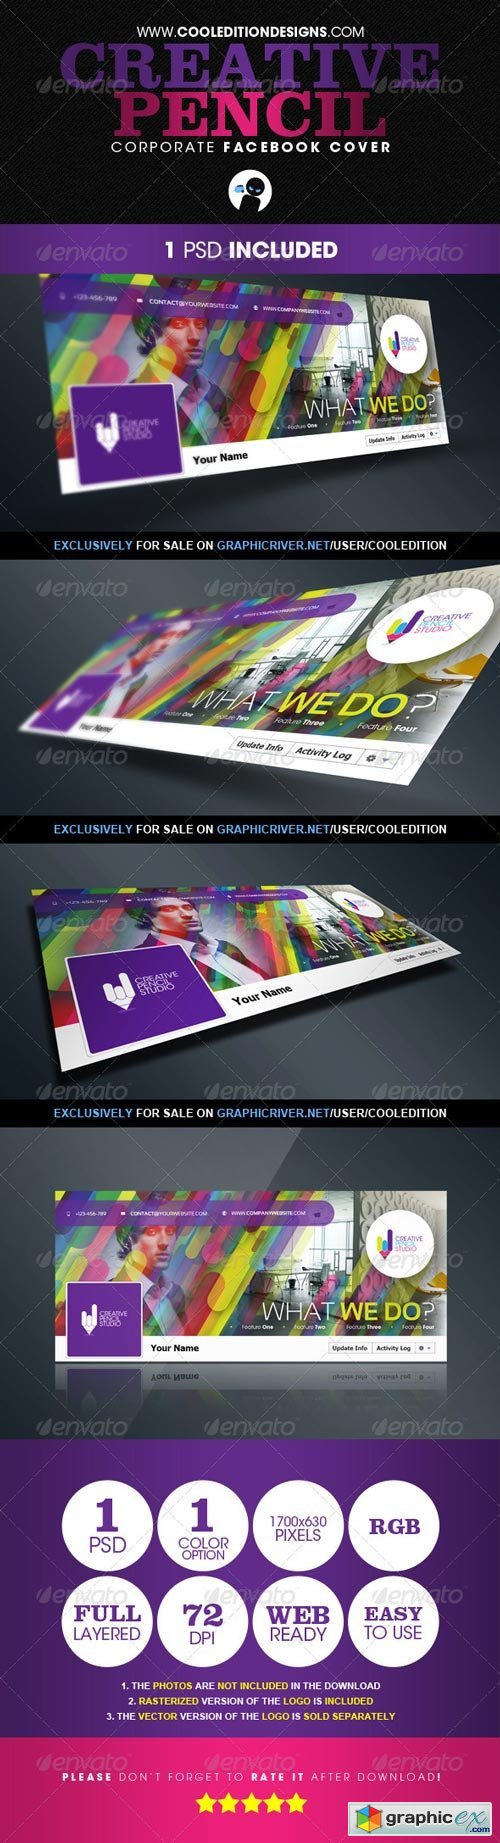 Creative Pencil - Corporate Facebook Cover